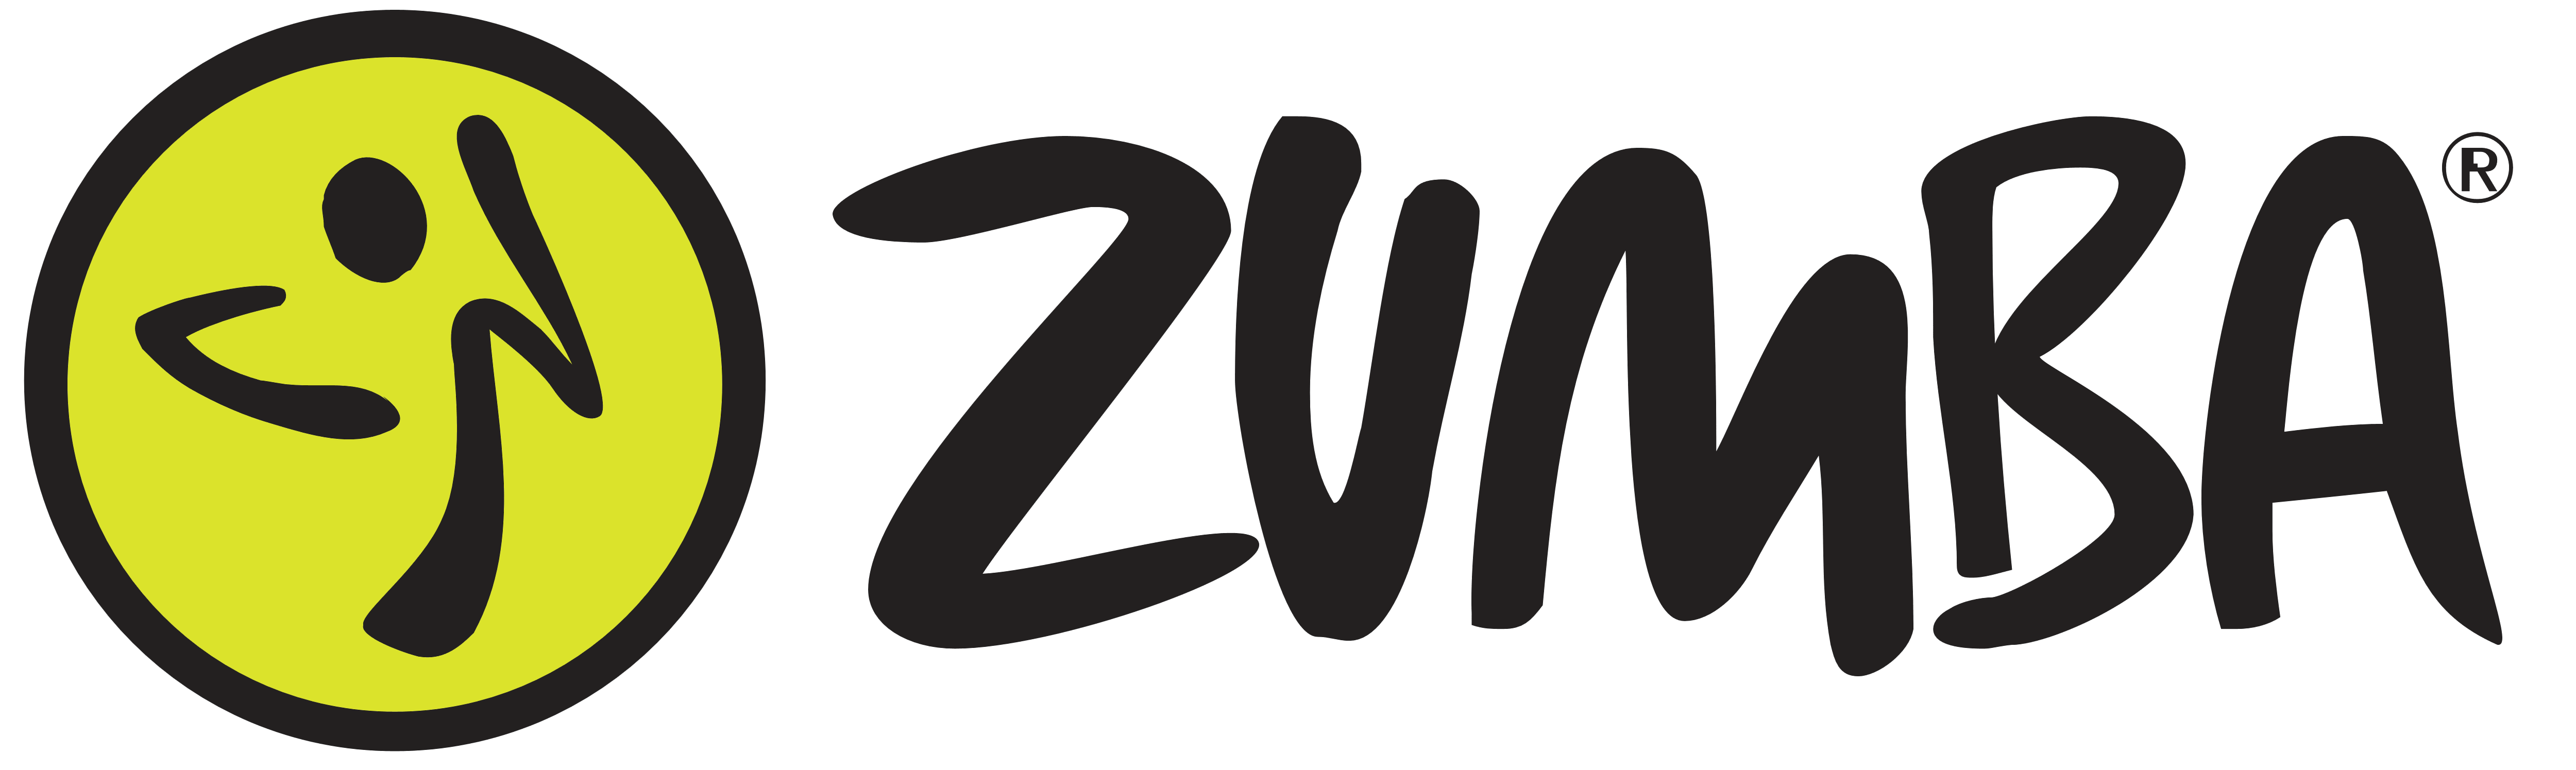 Zumba Fitness – Logos Download